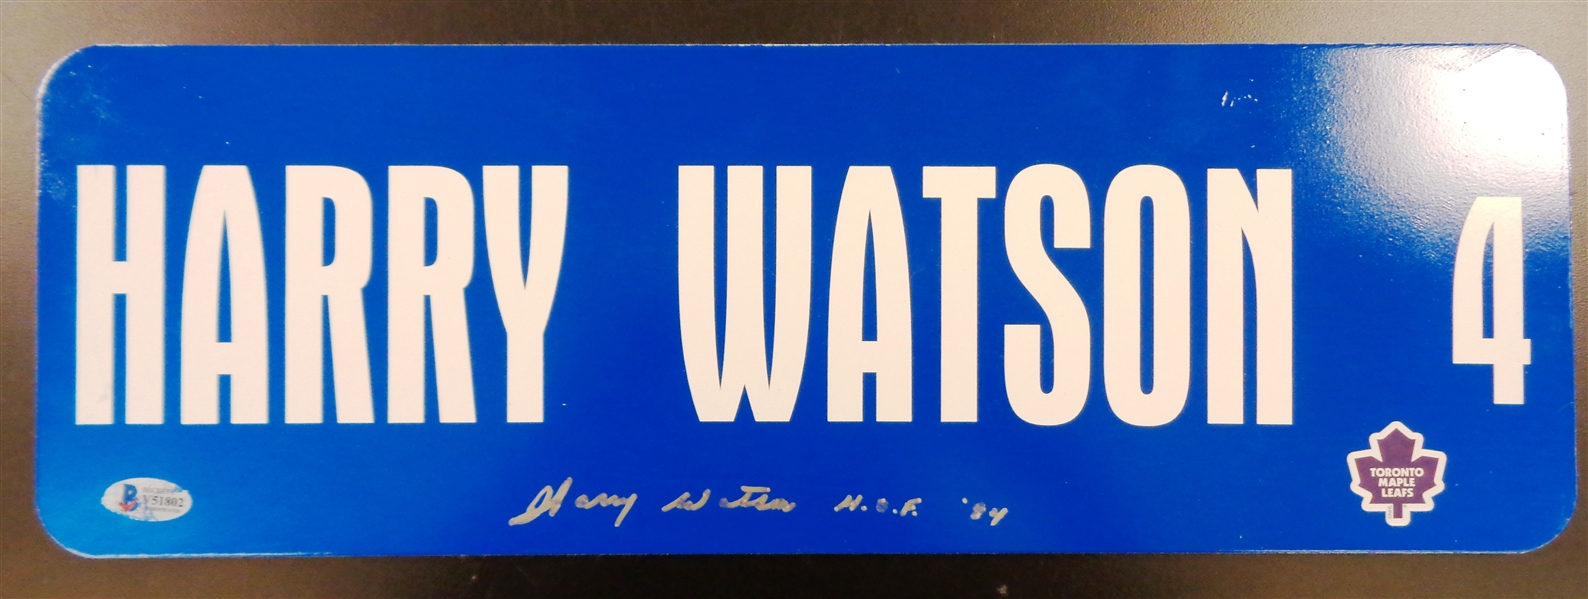 Harry Watson Autographed 6x18 Metal Street Sign